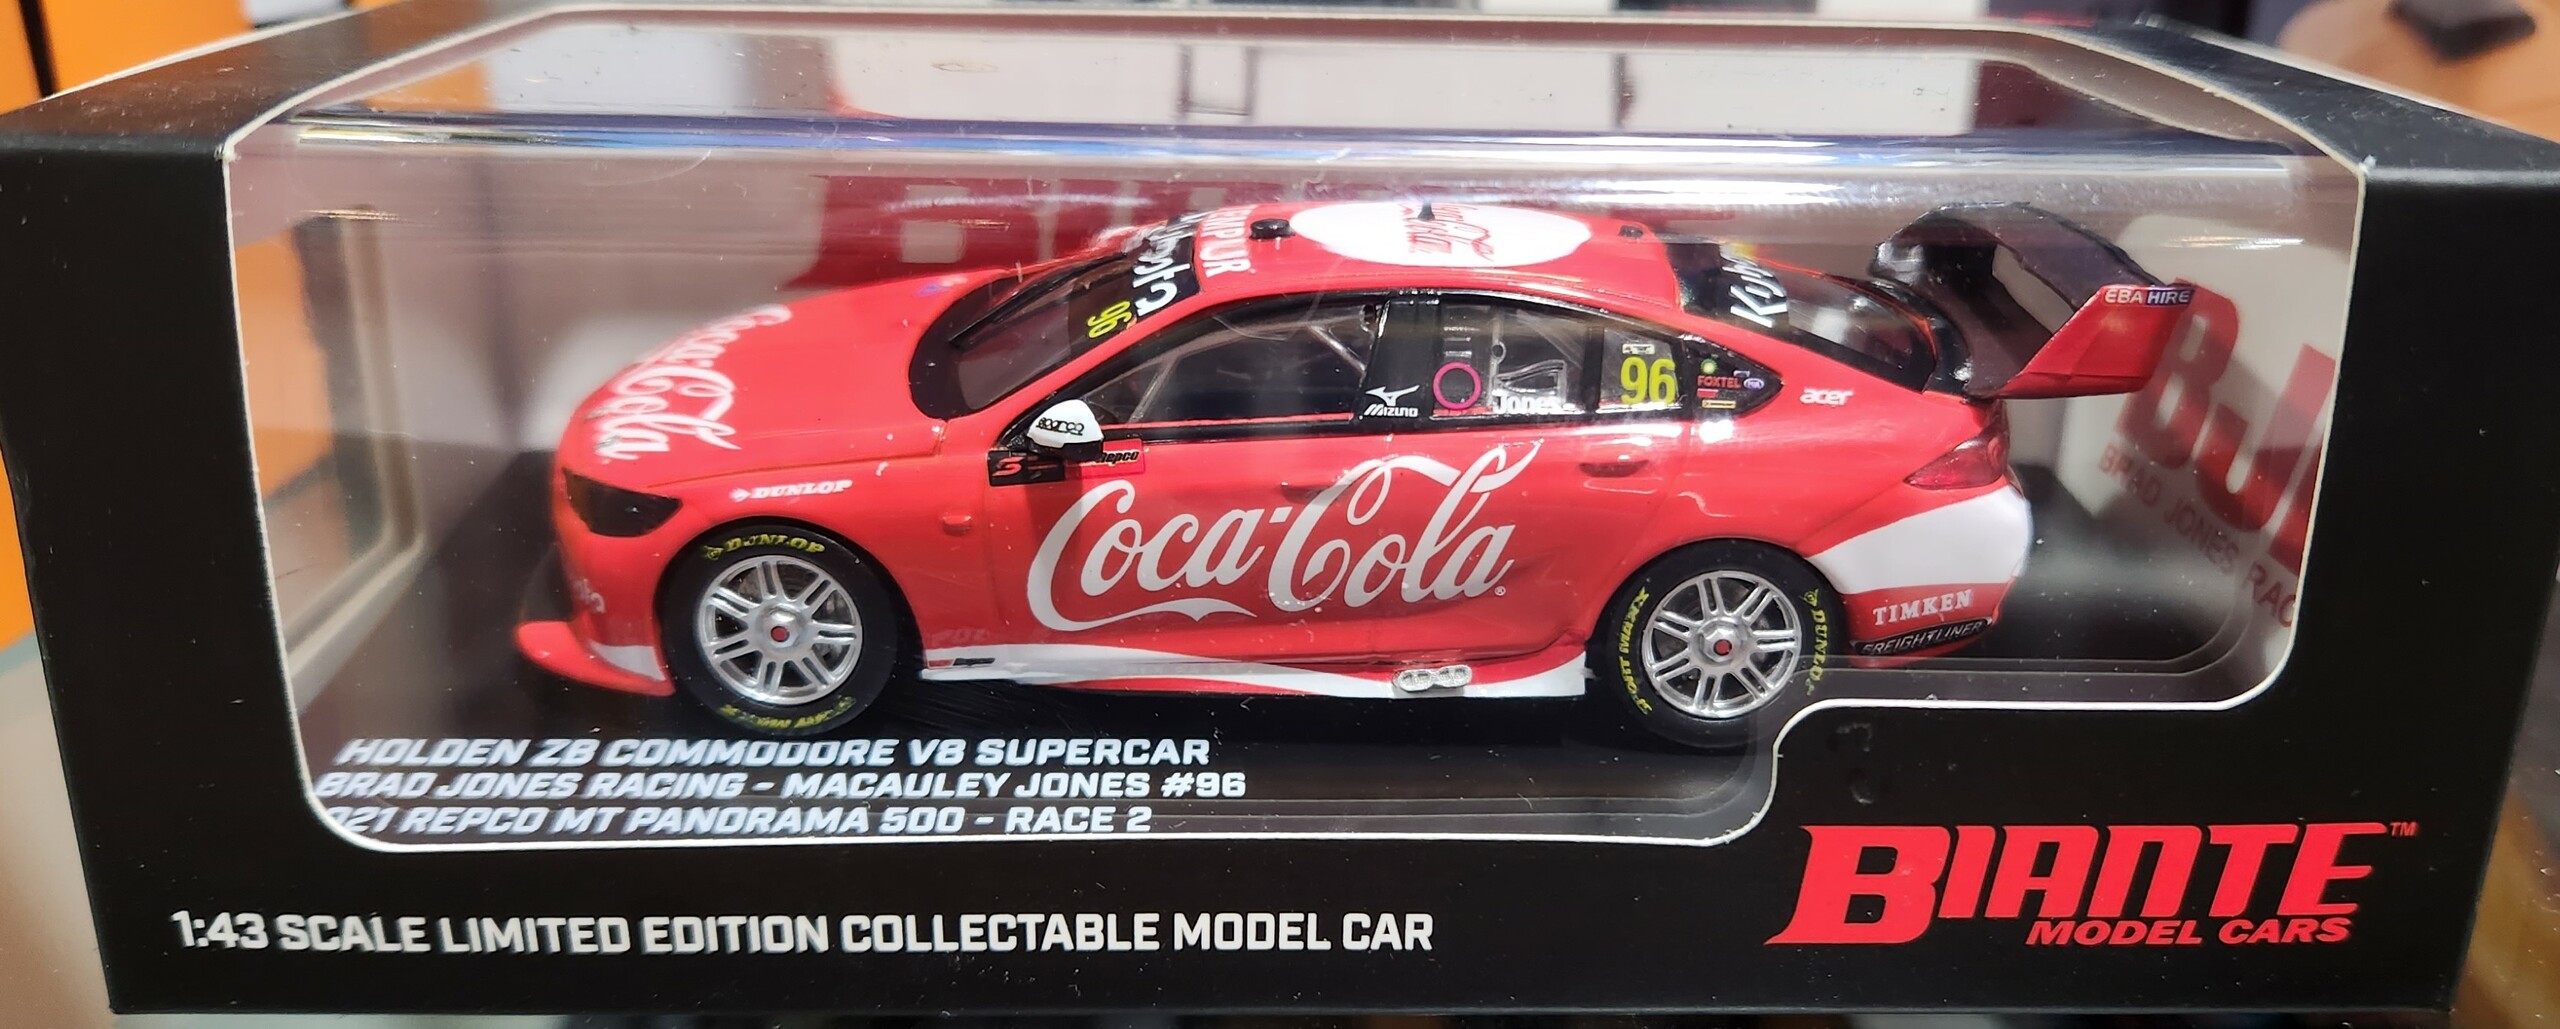 Holden ZB Commodore MaCauley Jones Coca Cola Brad Jones Racing, Race 2, 2021 Repco Mt Panorama 500 Biante 1/43